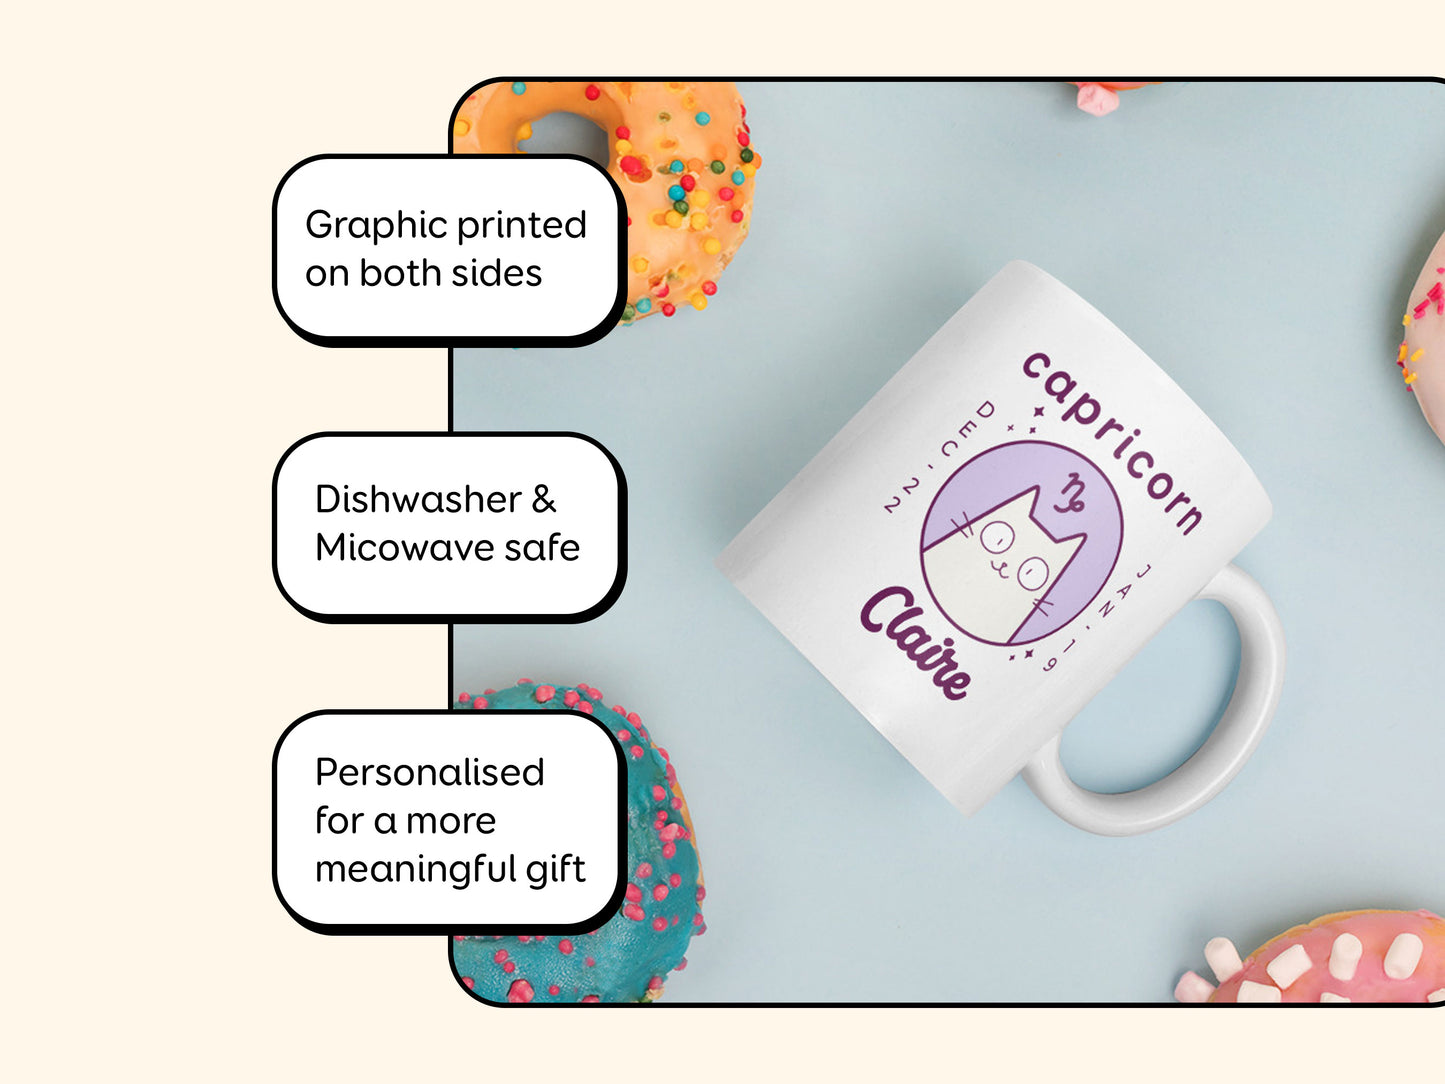 Personalised Capricorn Cat Mug